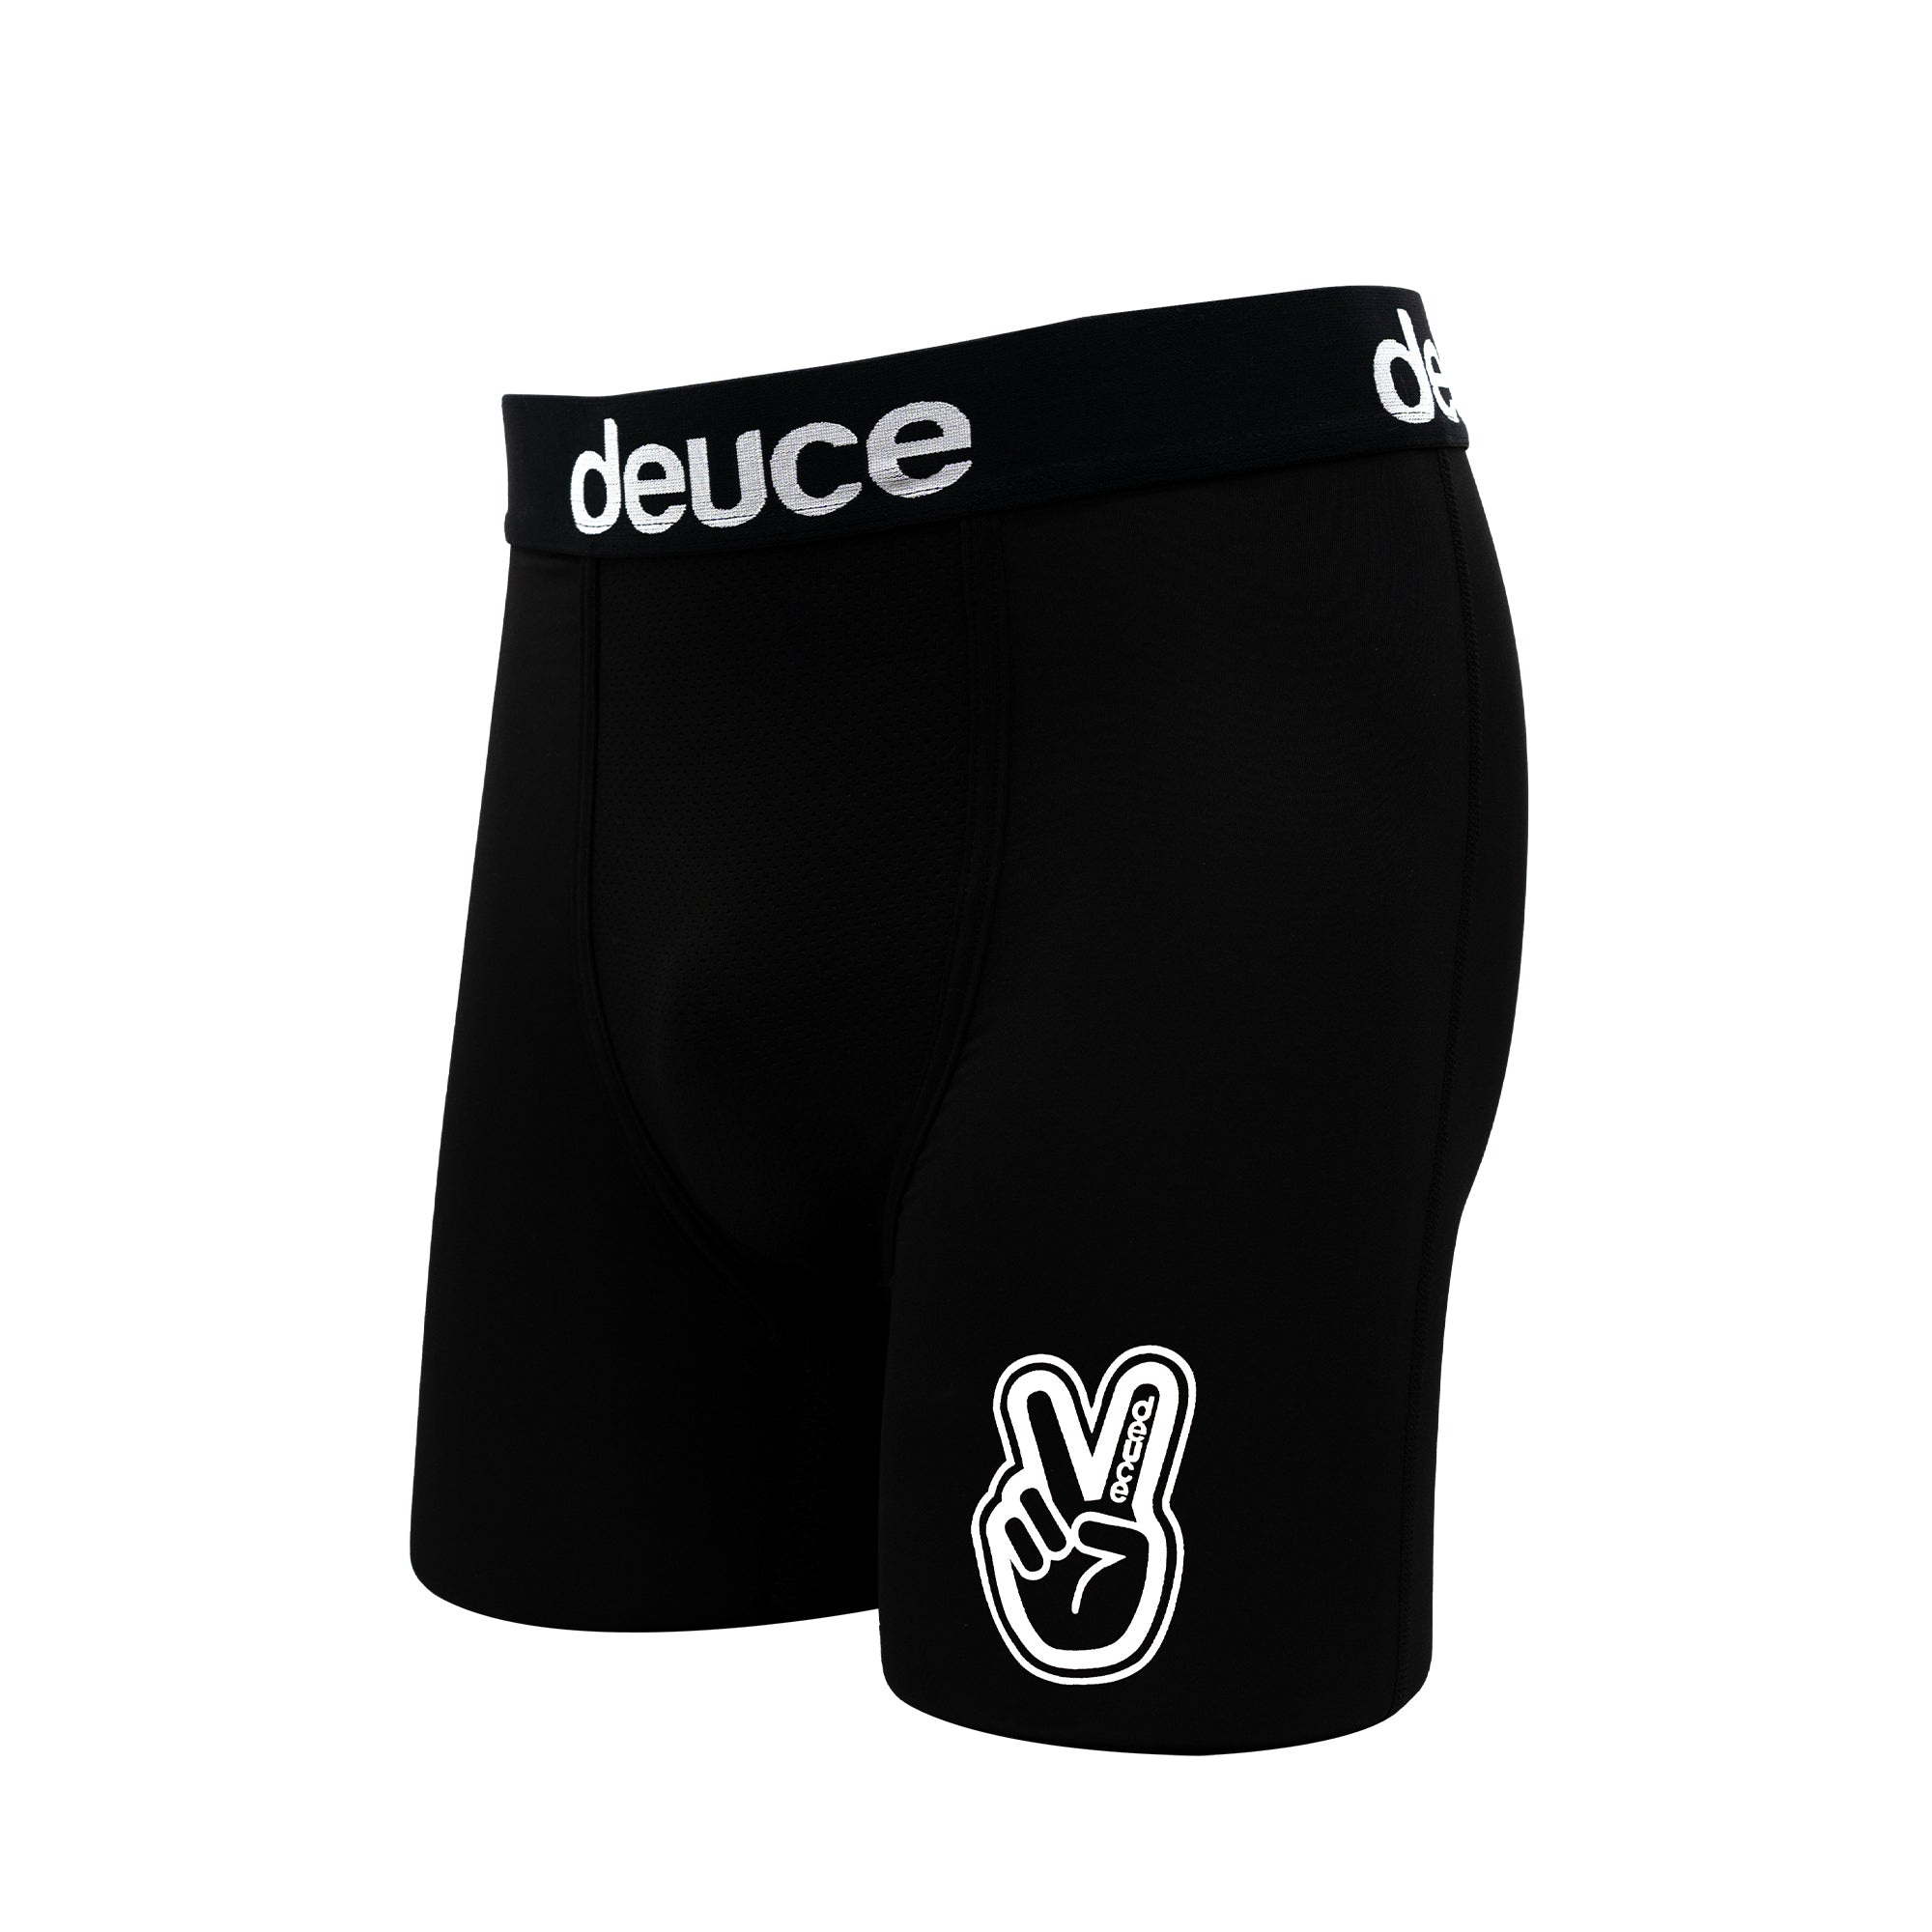 Deuce Performance Underwear  Solid Black – Deuce Brand